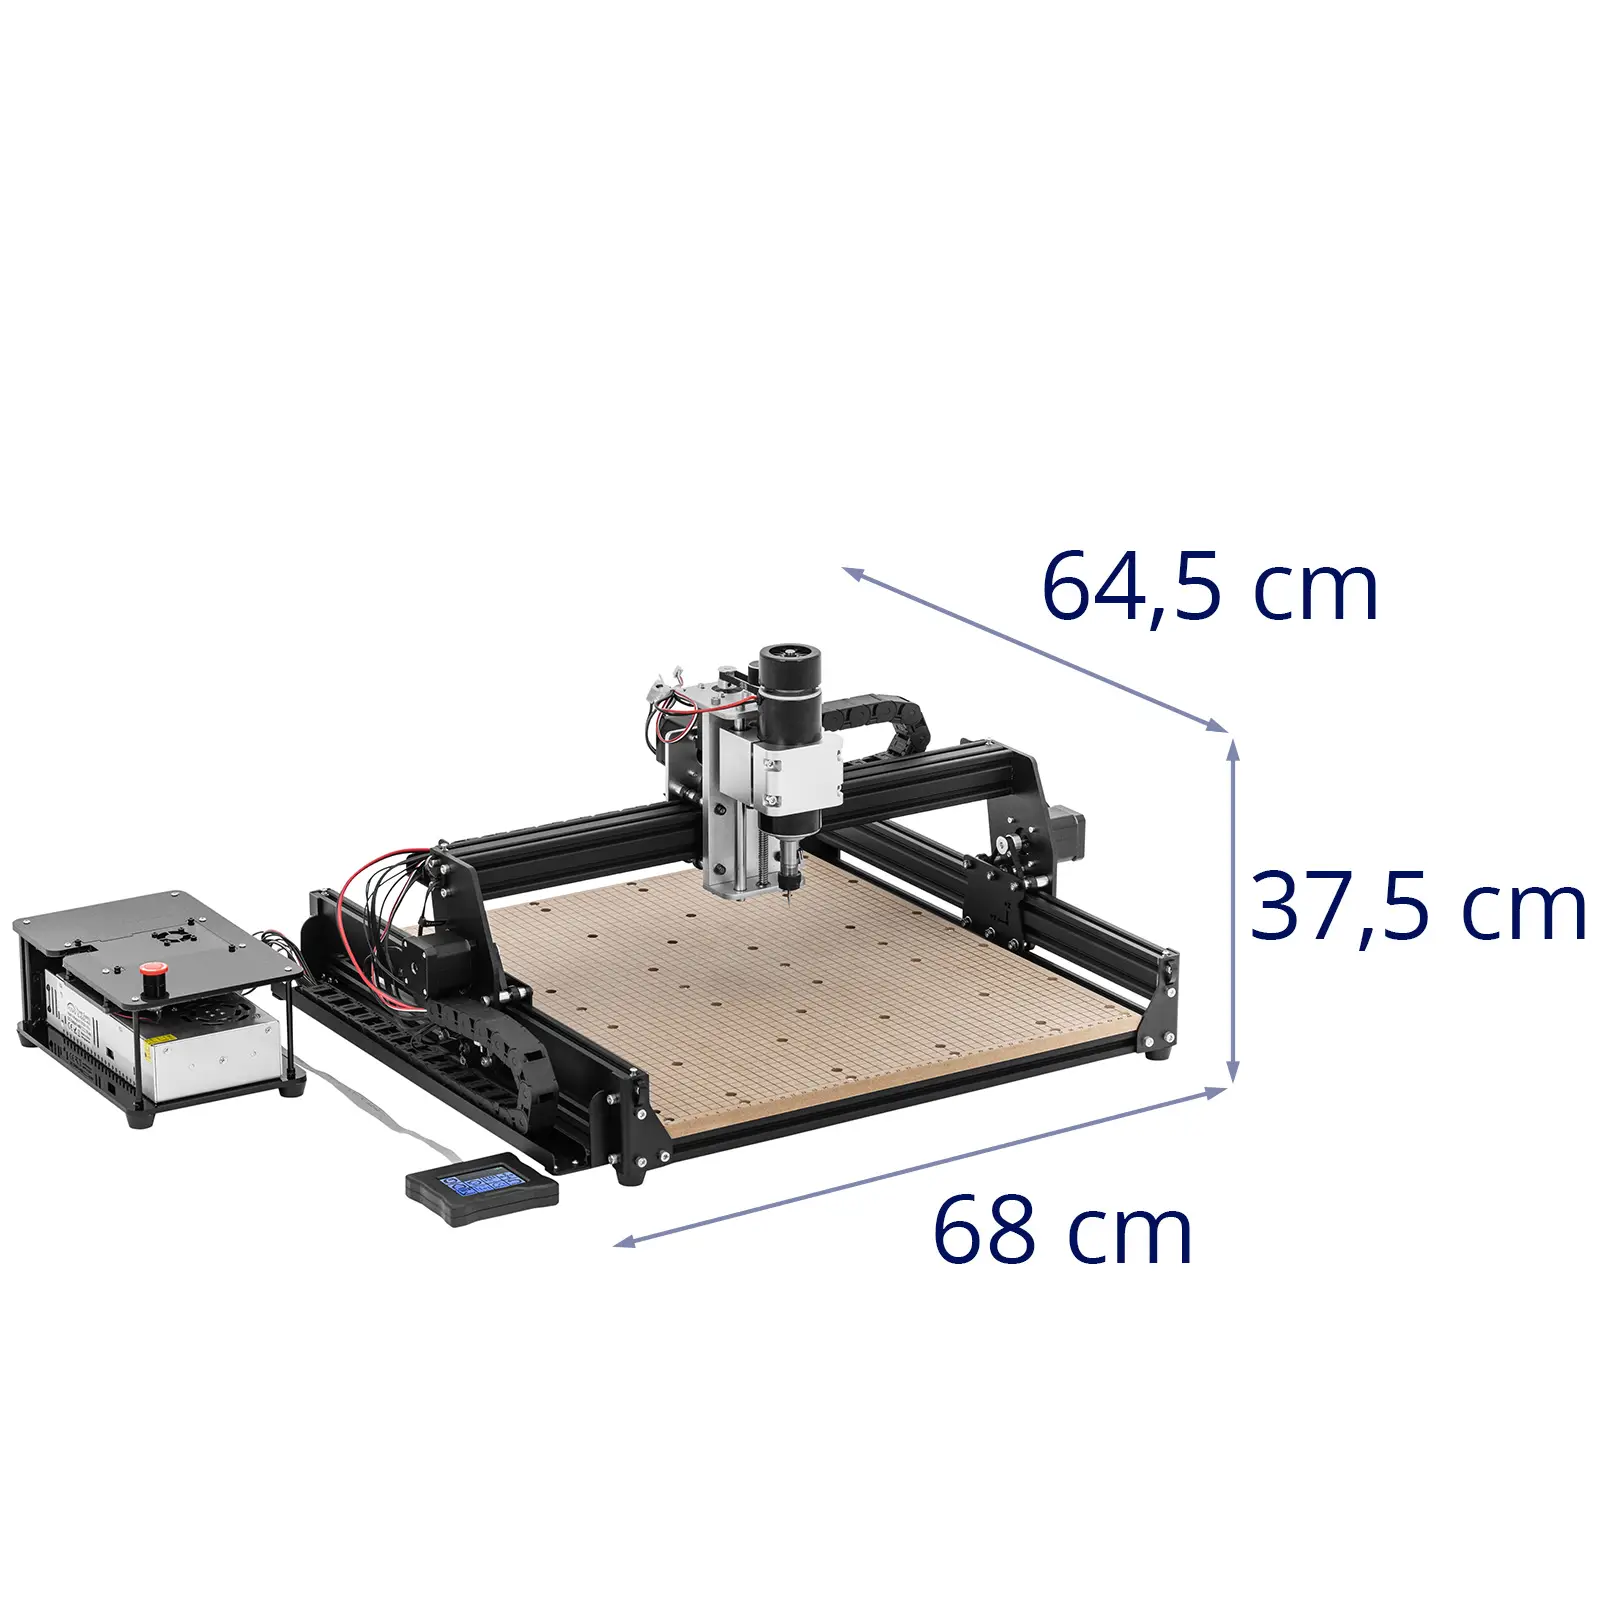 CNC milling machine - 500 W - 43 x 39 cm